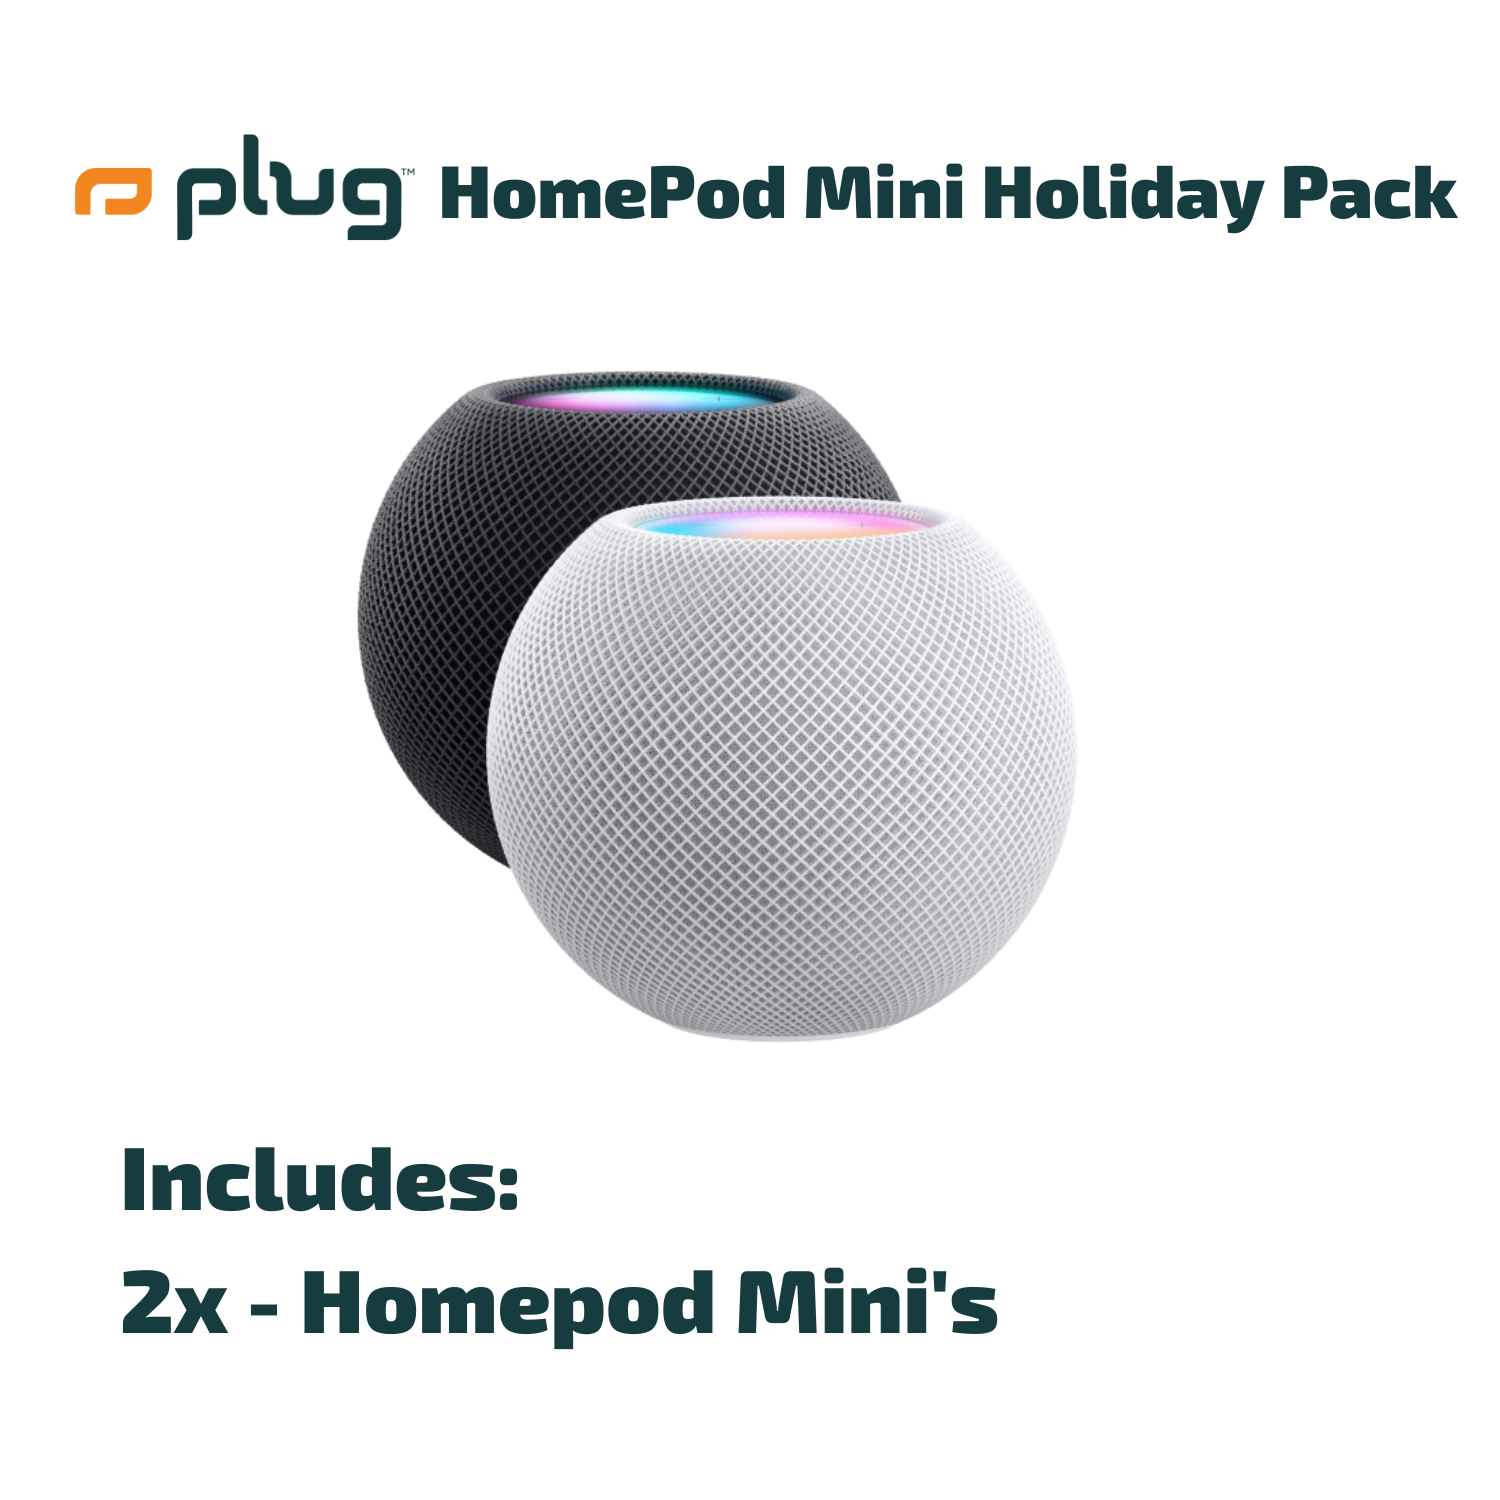 plug Homepod Mini Holiday Pack